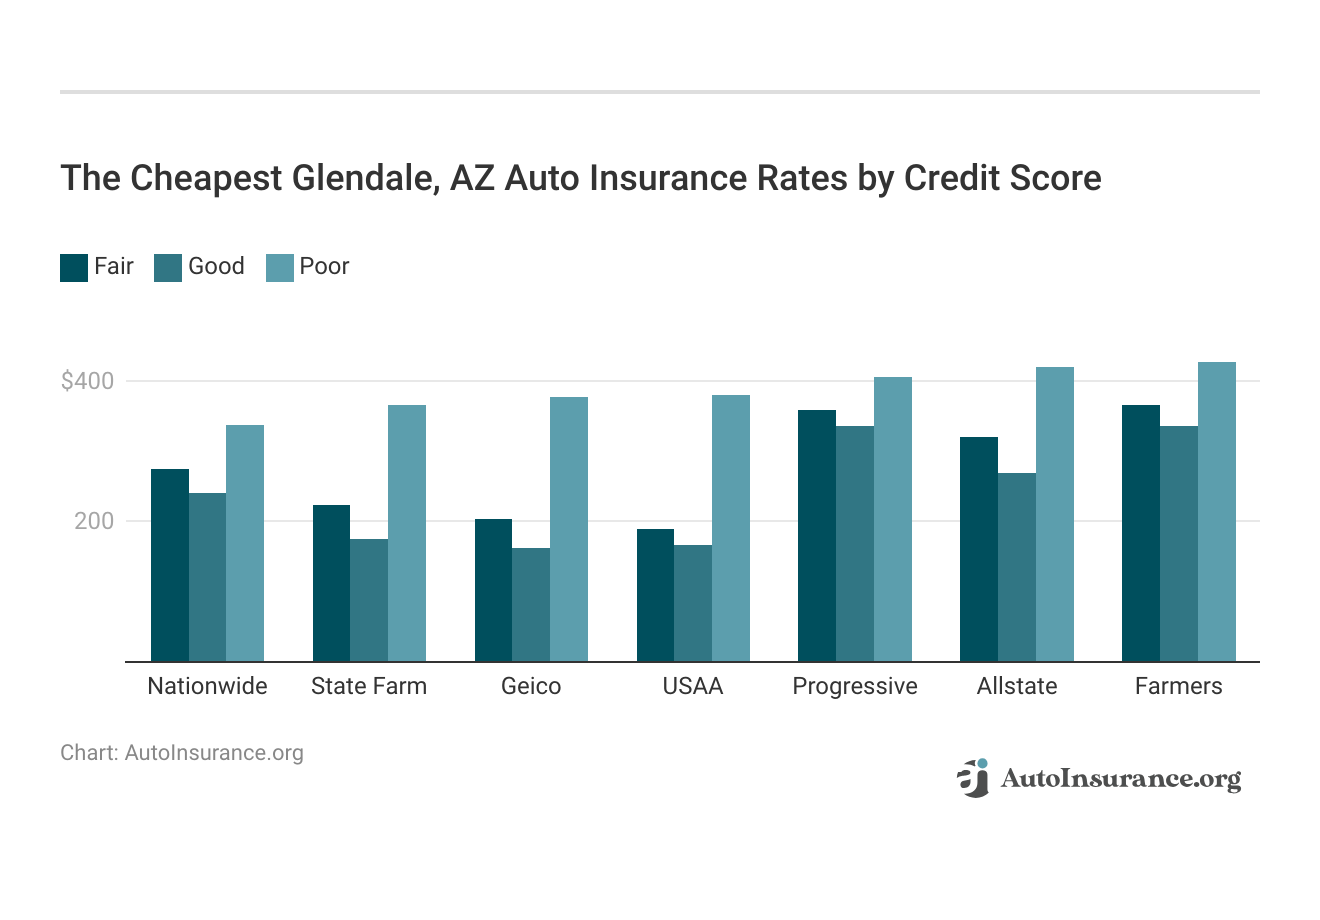 <h3>The Cheapest Glendale, AZ Auto Insurance Rates by Credit Score</h3>